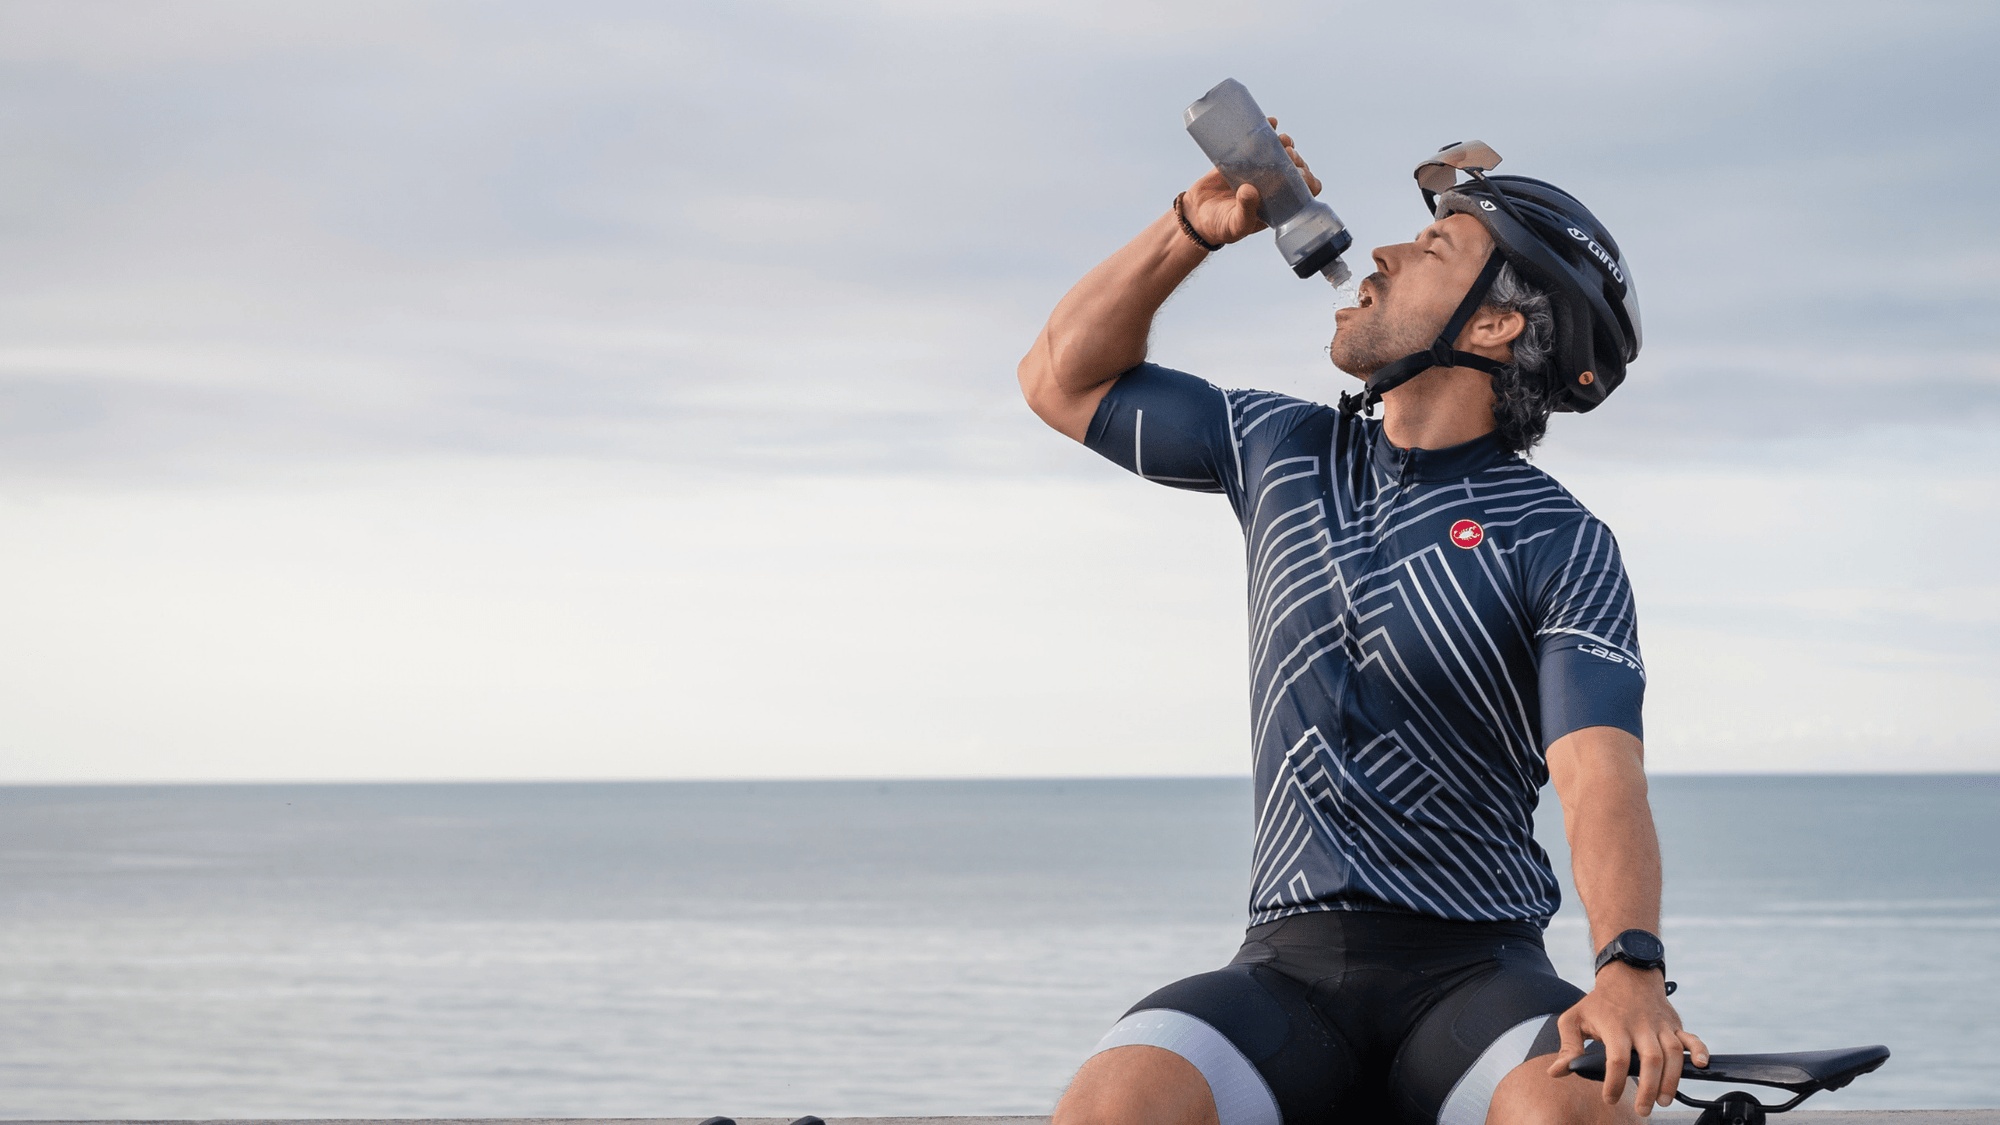 Electrolyte Endurance Sports cyclist drinking endurance fuel